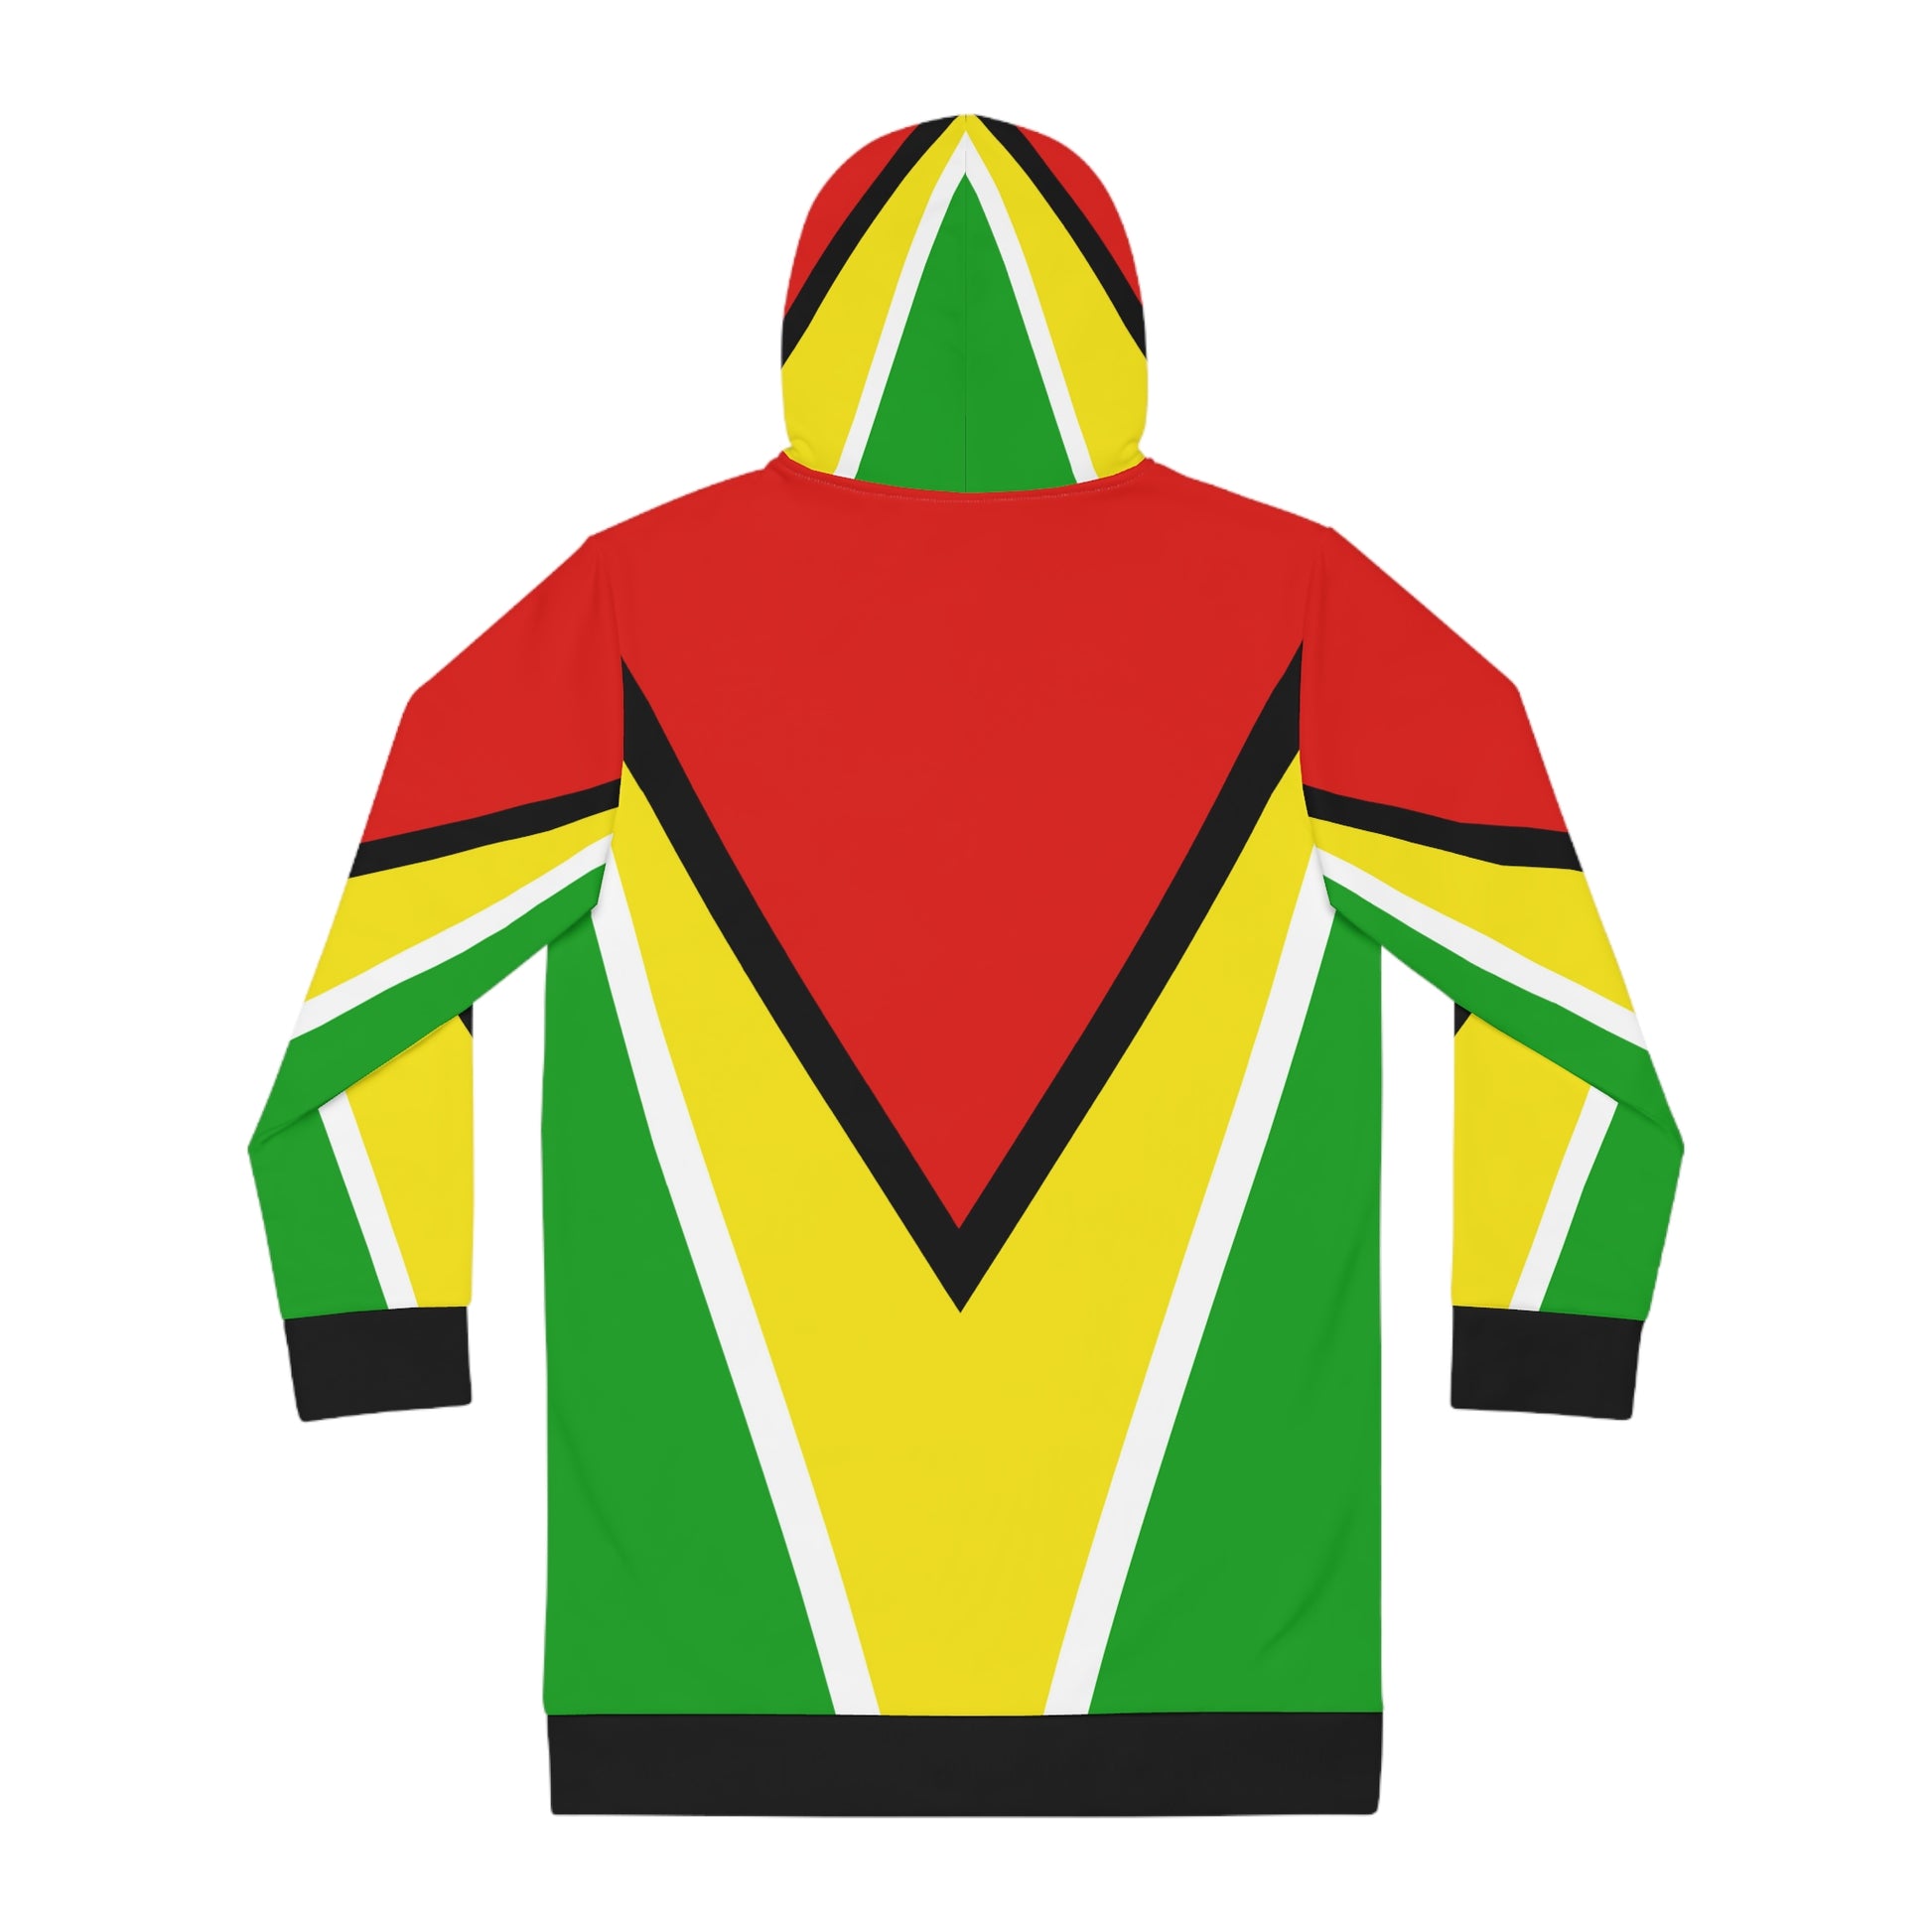 Guyana Flag Women's Hoodie Dress by Guyanese Swag.